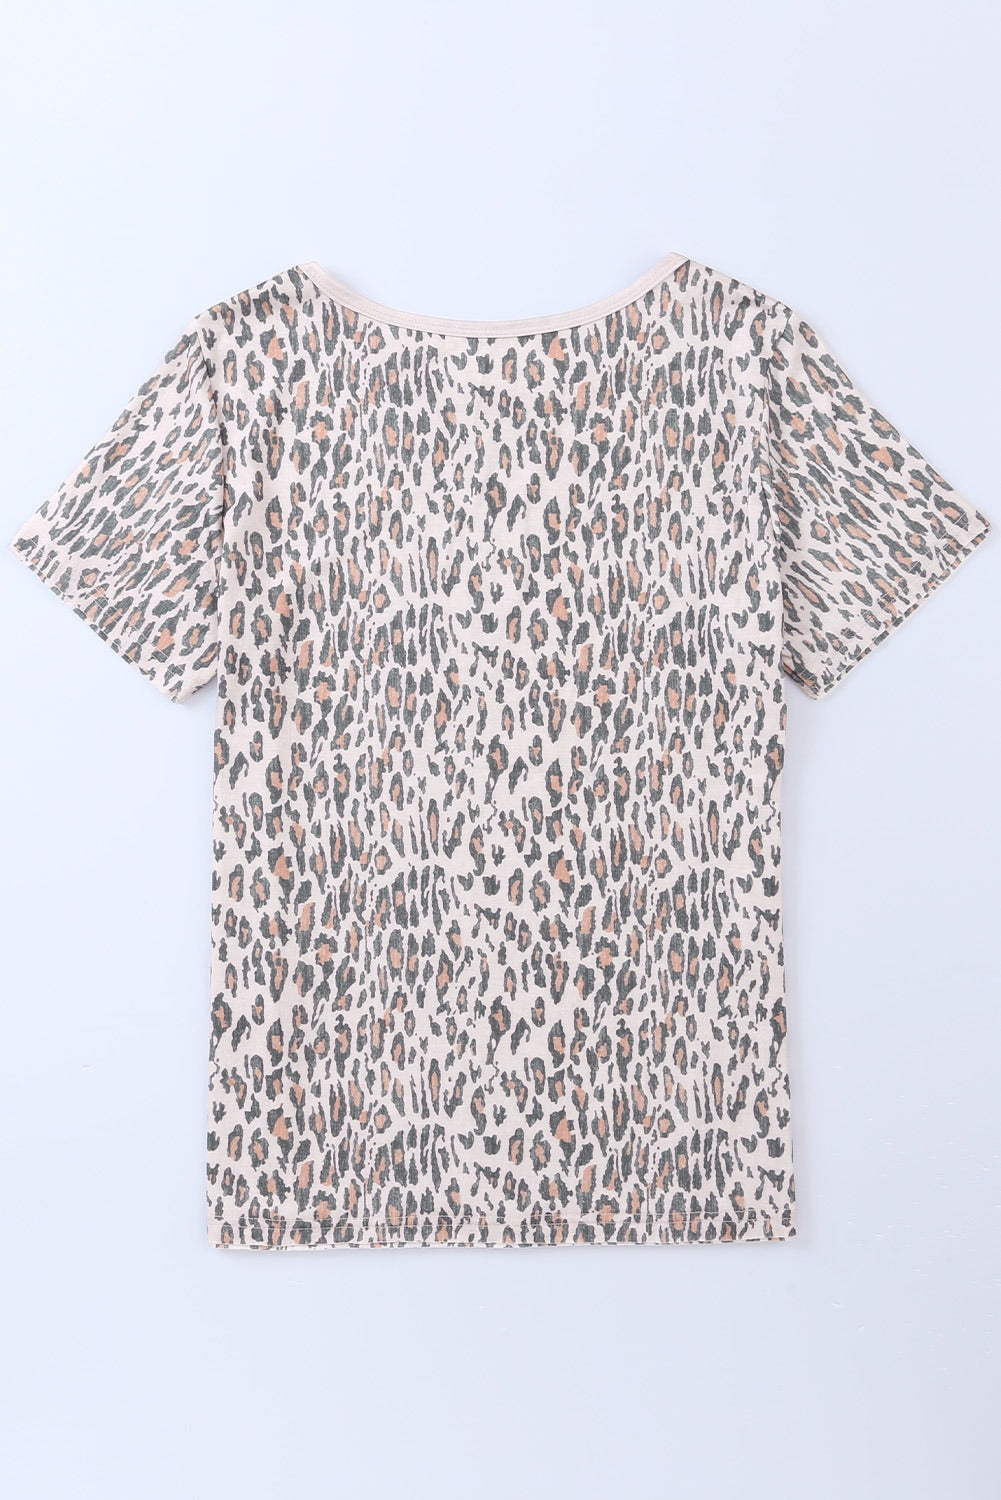 Casual Leopard T-Shirt Top